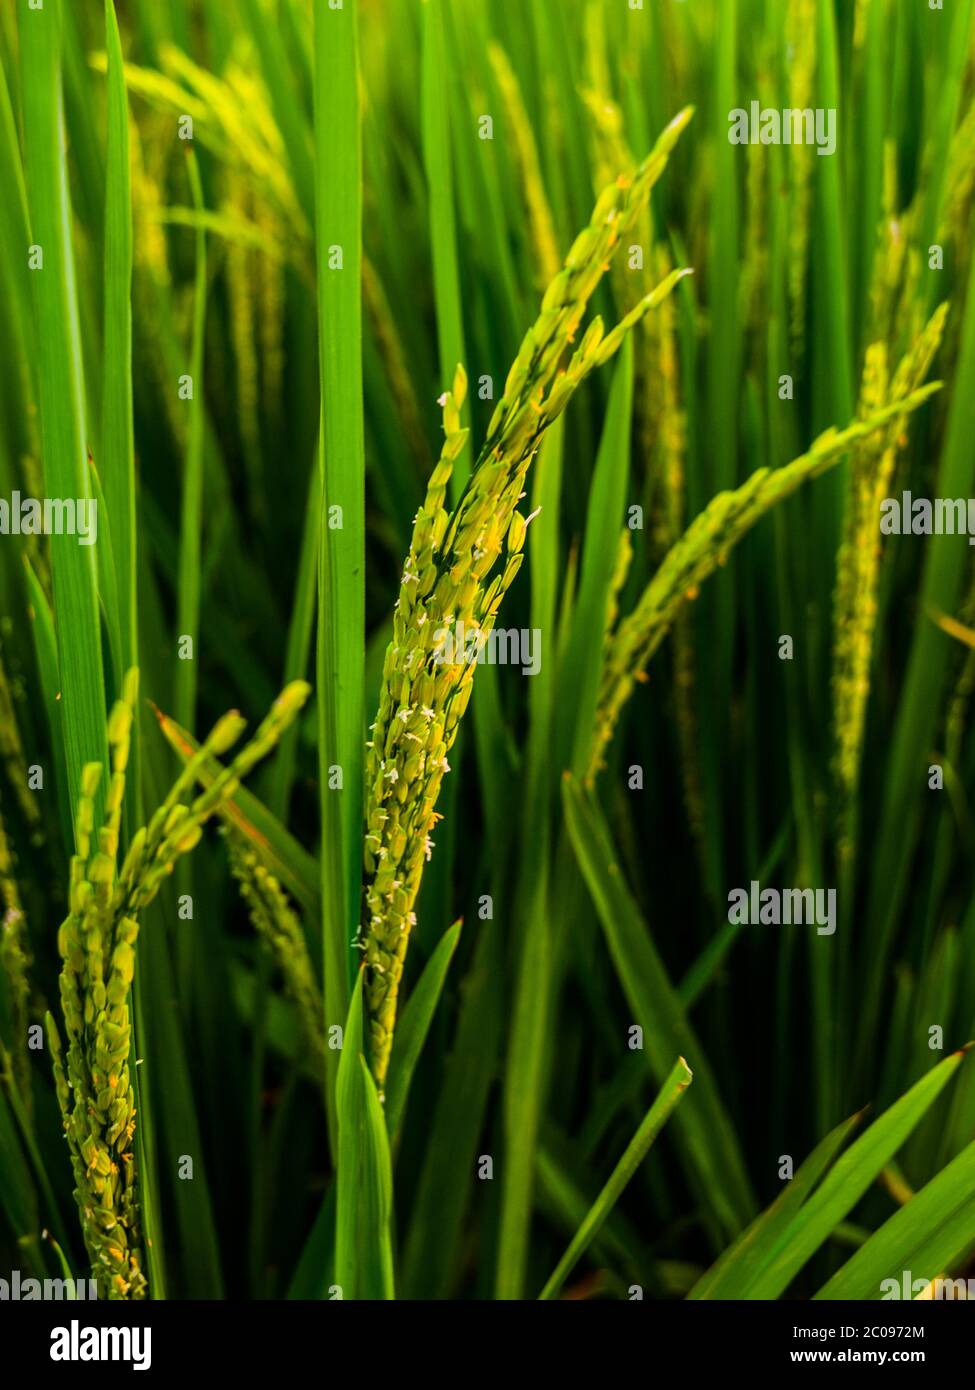 Asian rice plant (Oryza sativa) Stock Photo